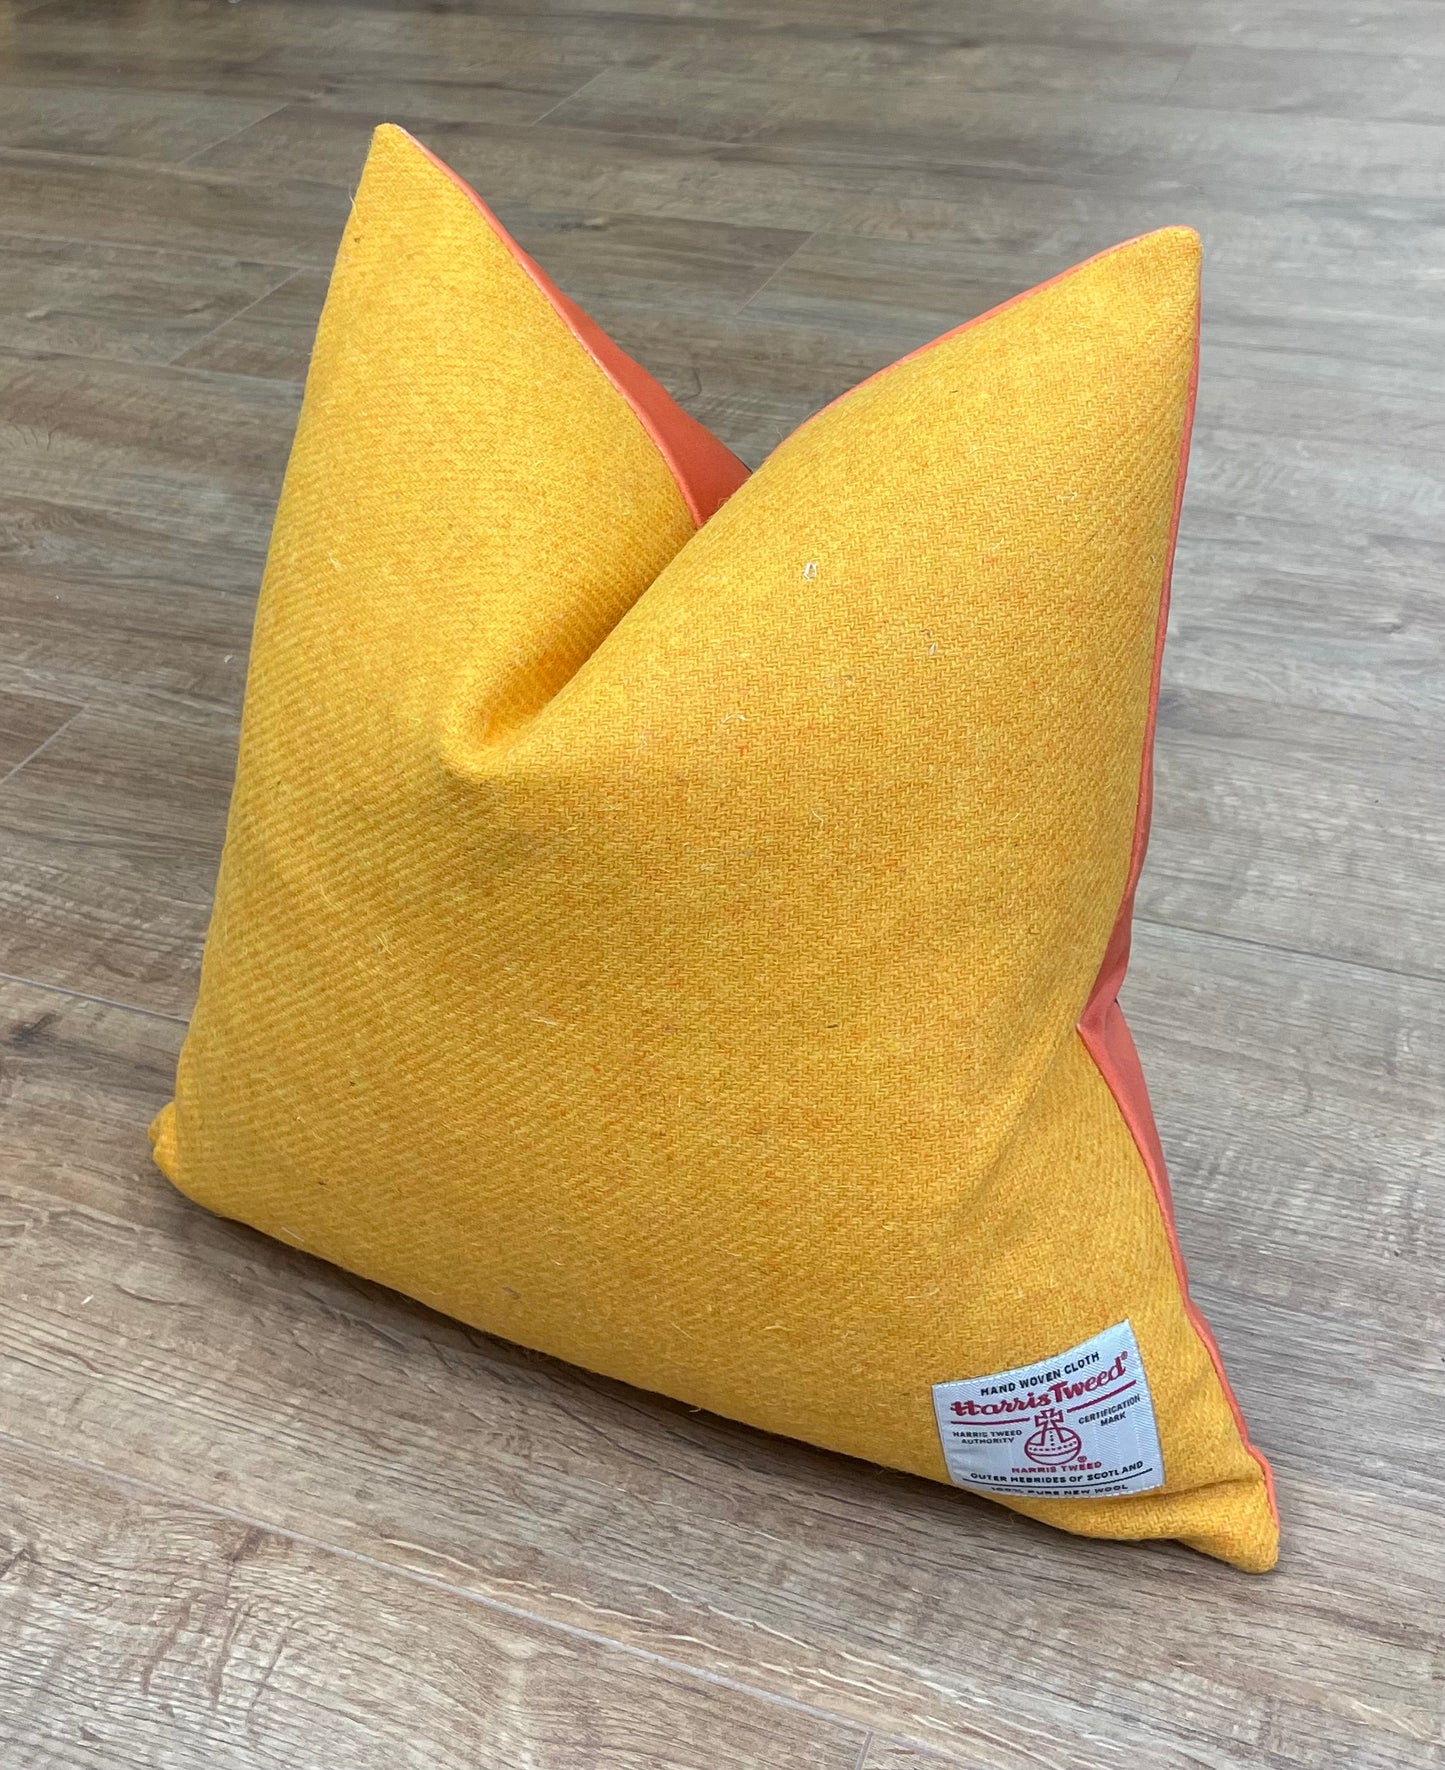 Bumble Bee Velvet and Yellow Harris Tweed Cushion 18”